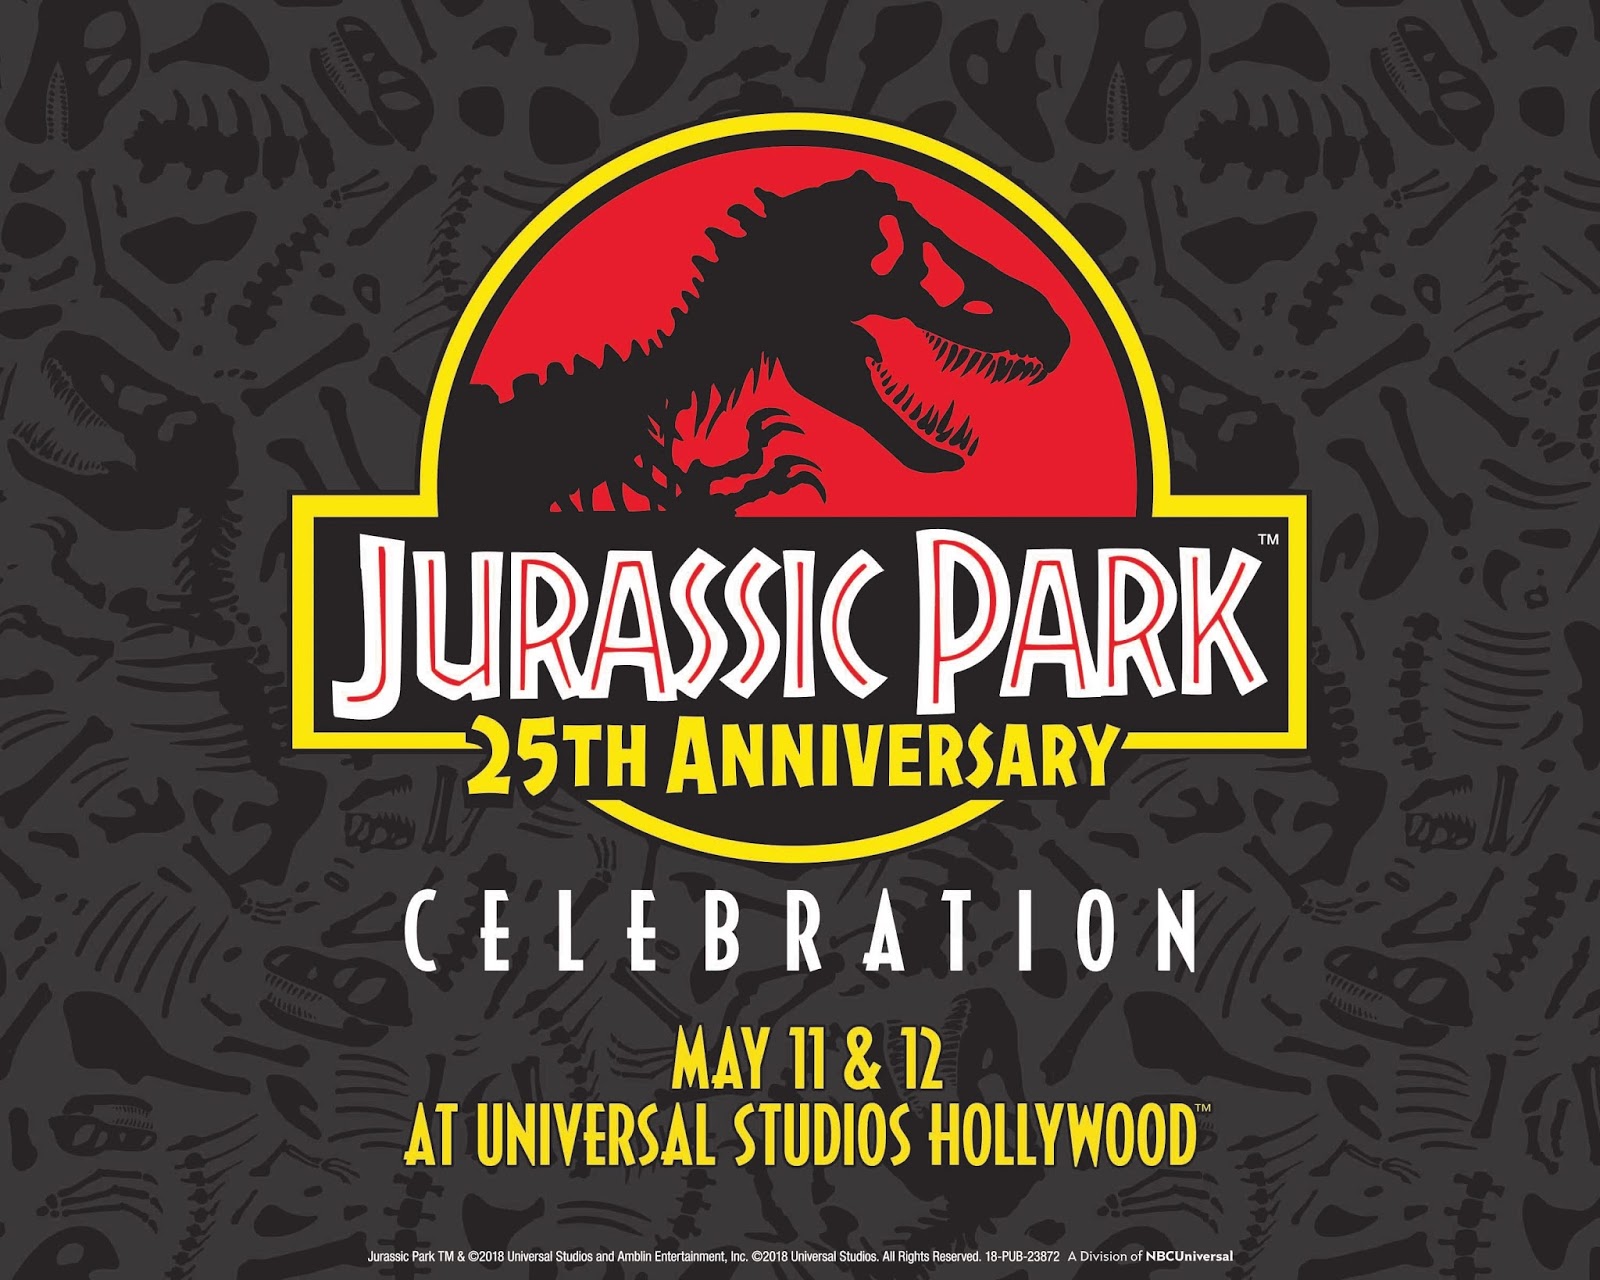 Jurassic Park 25th Anniversary Celebration at Universal Studios Hollywood